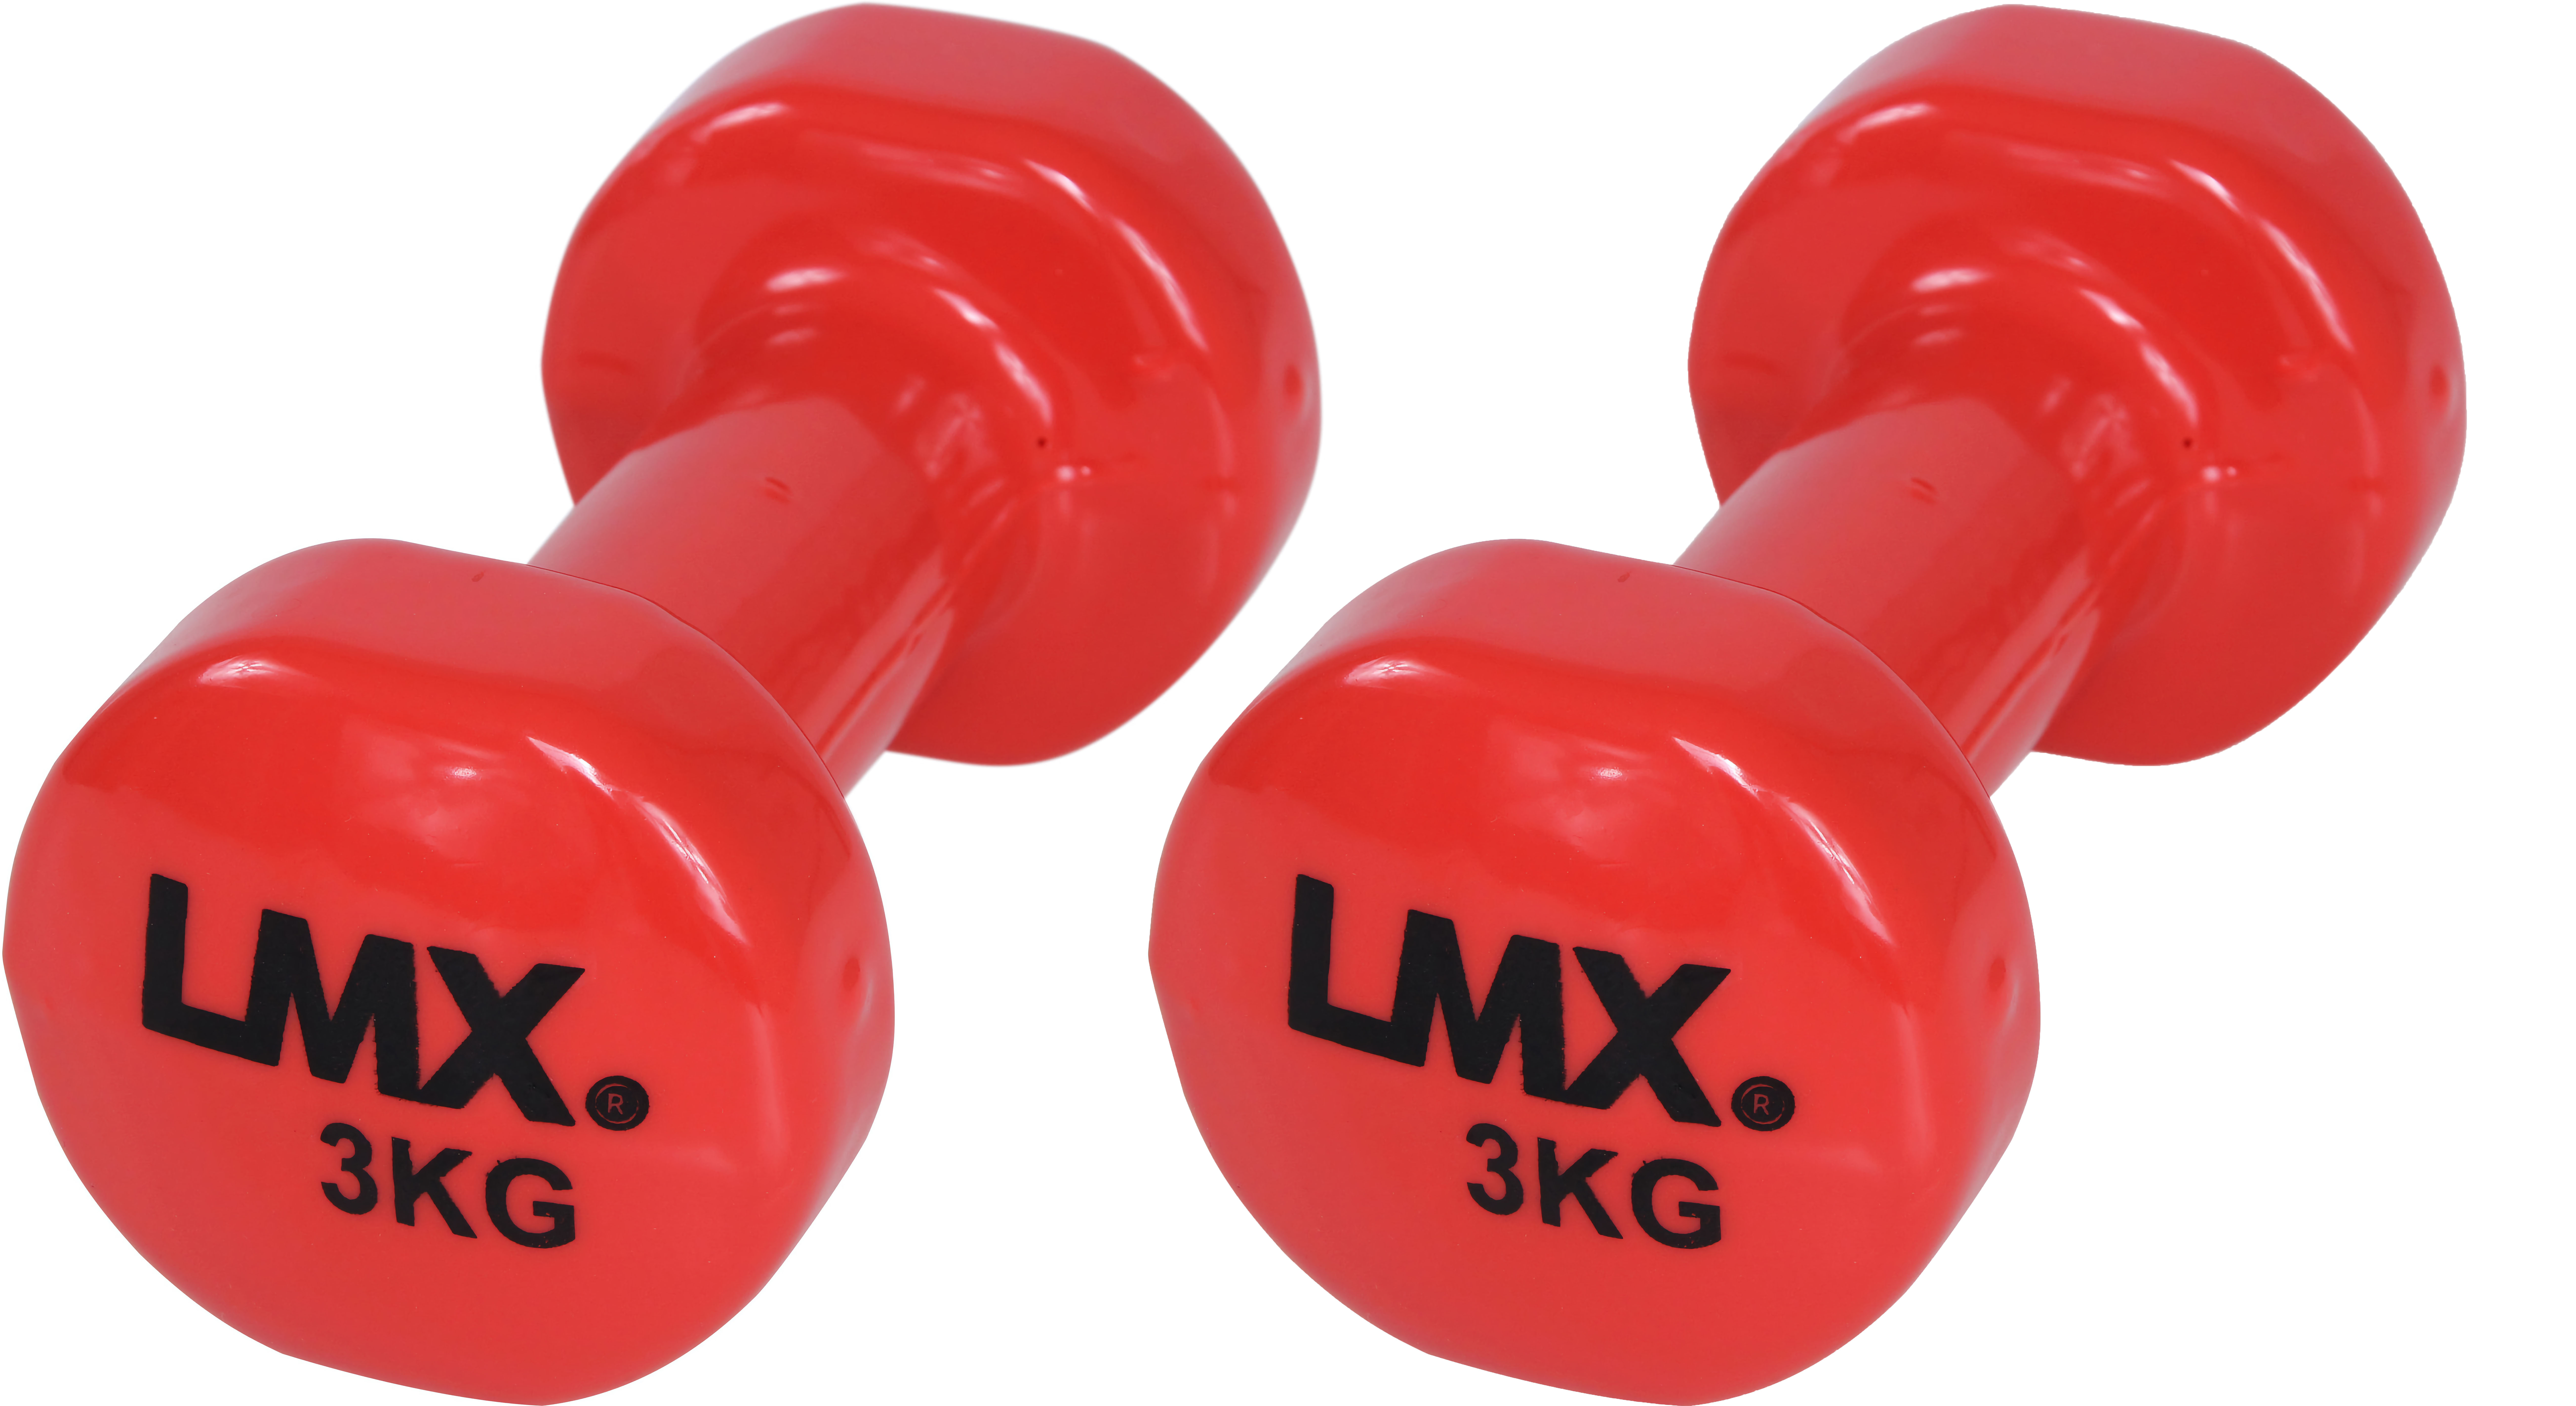 LMX. Vinyl Håndvægtsæt 3 kg Red thumbnail